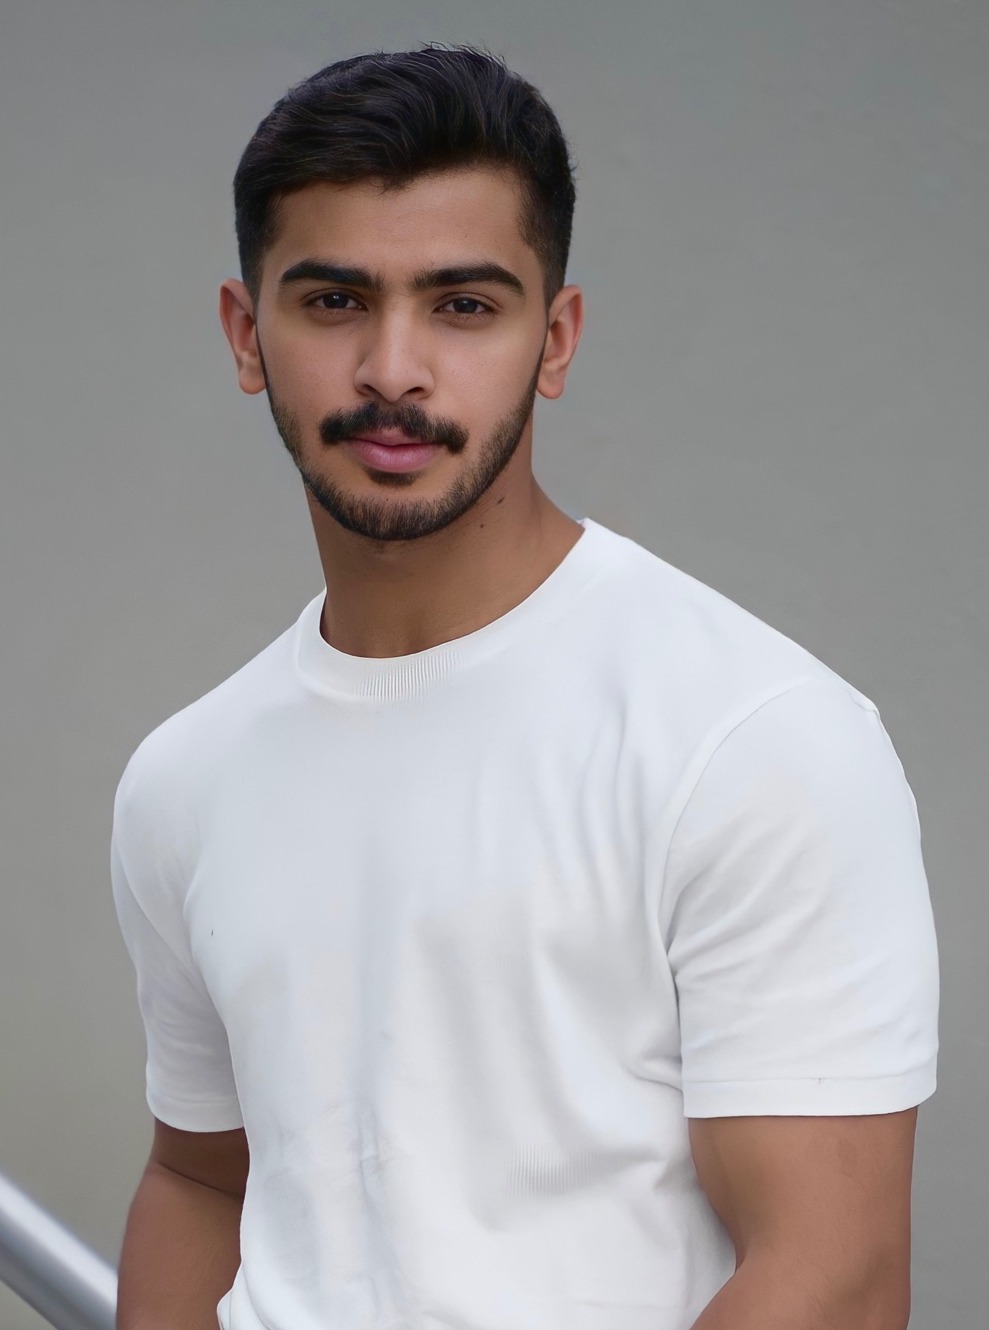 Mohamed from Dibba alhusn | Portfolio & Profile - Model, Presenters ...